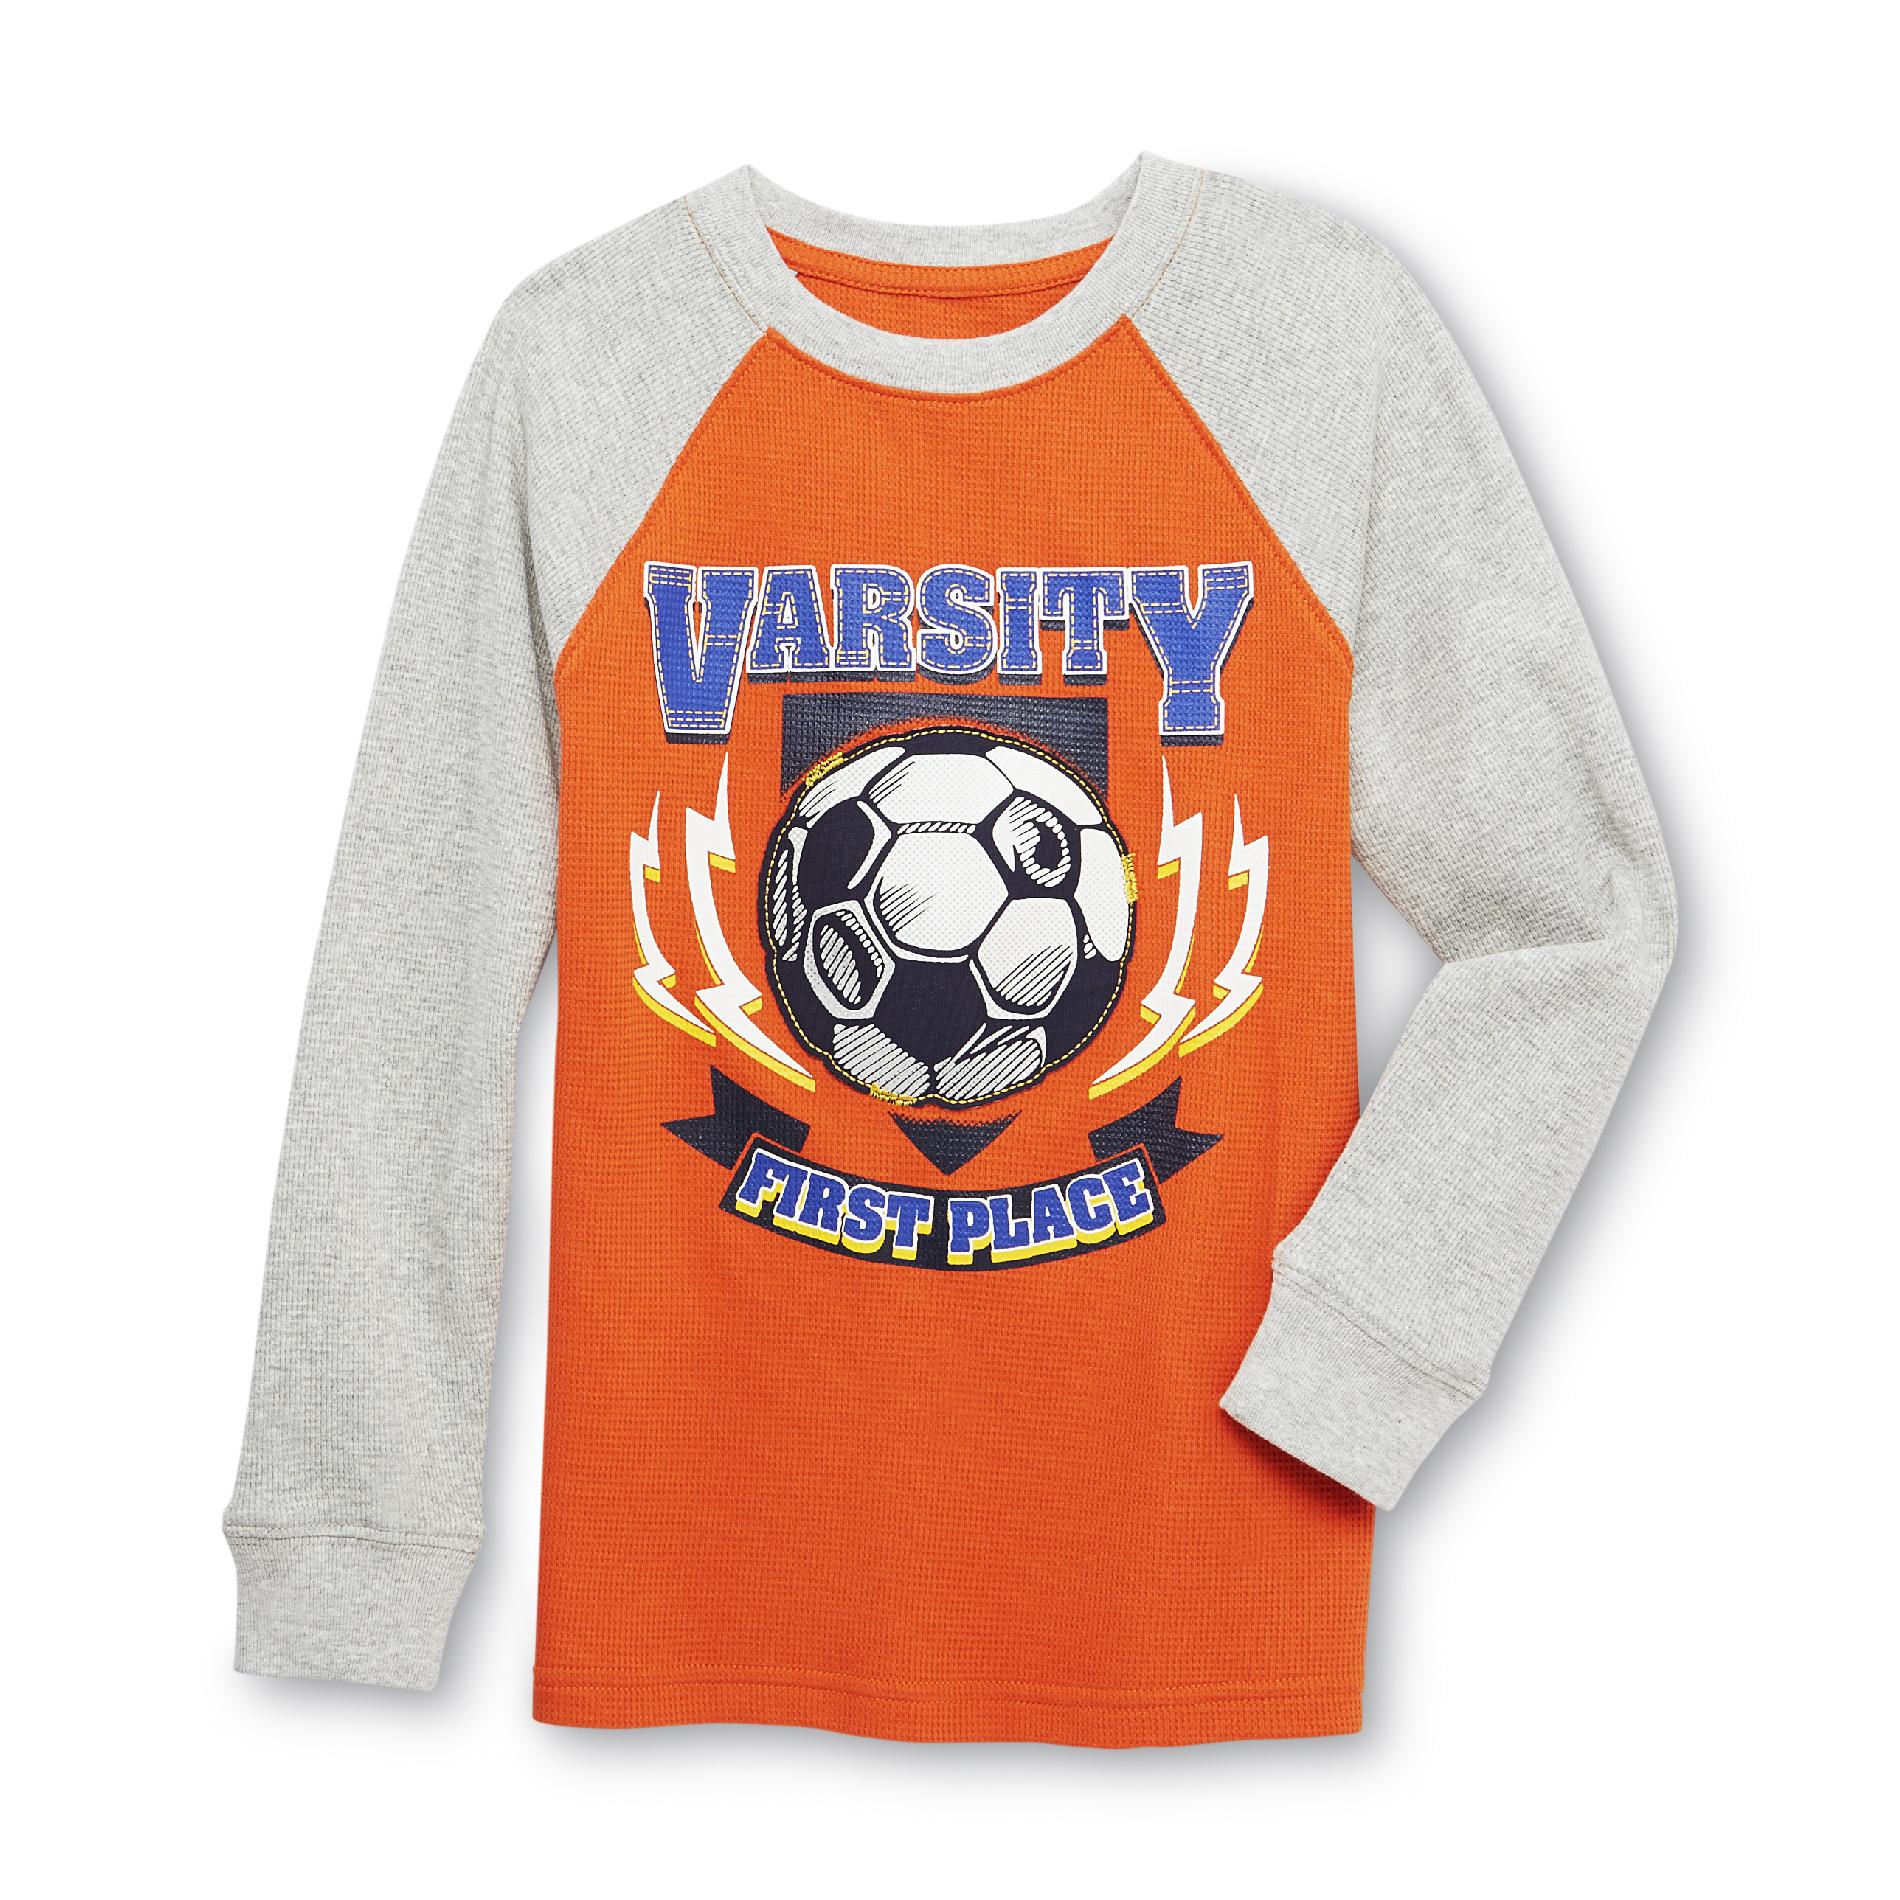 Toughskins Boy's Thermal Graphic T-Shirt - Varsity Soccer